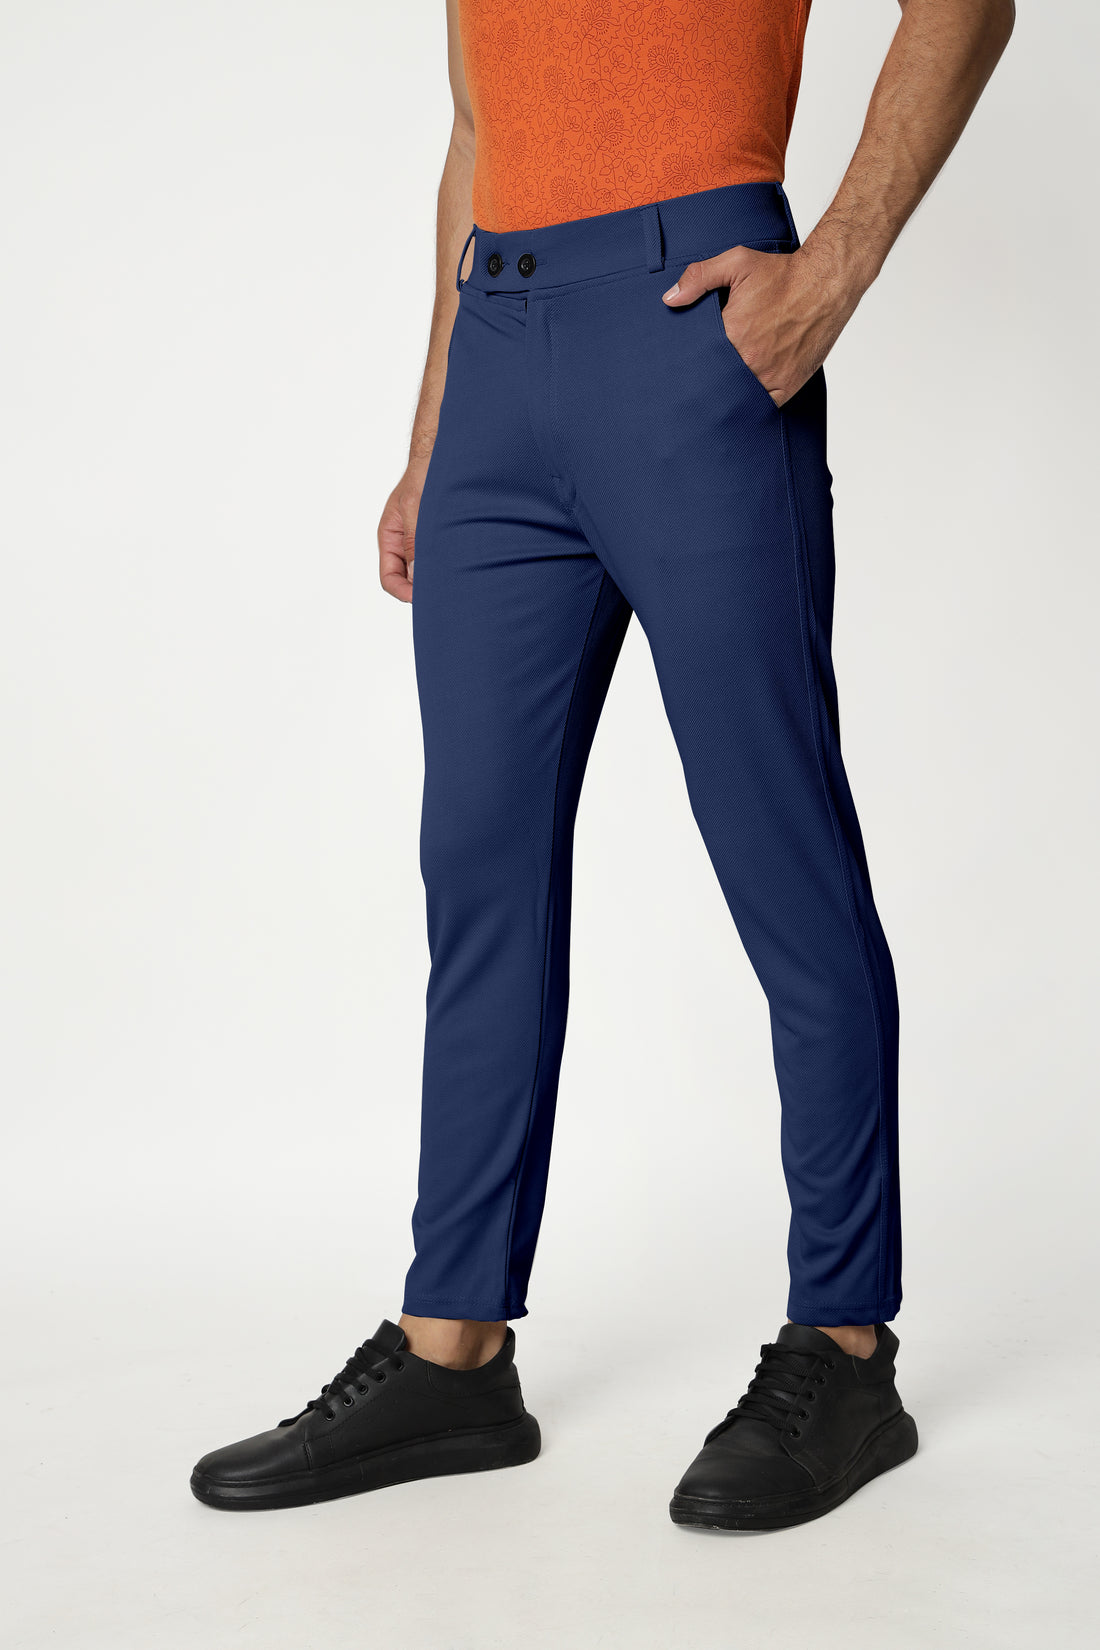 Navy Blue Lycra Stretchable Formal Slim Fit  Trouser Pant